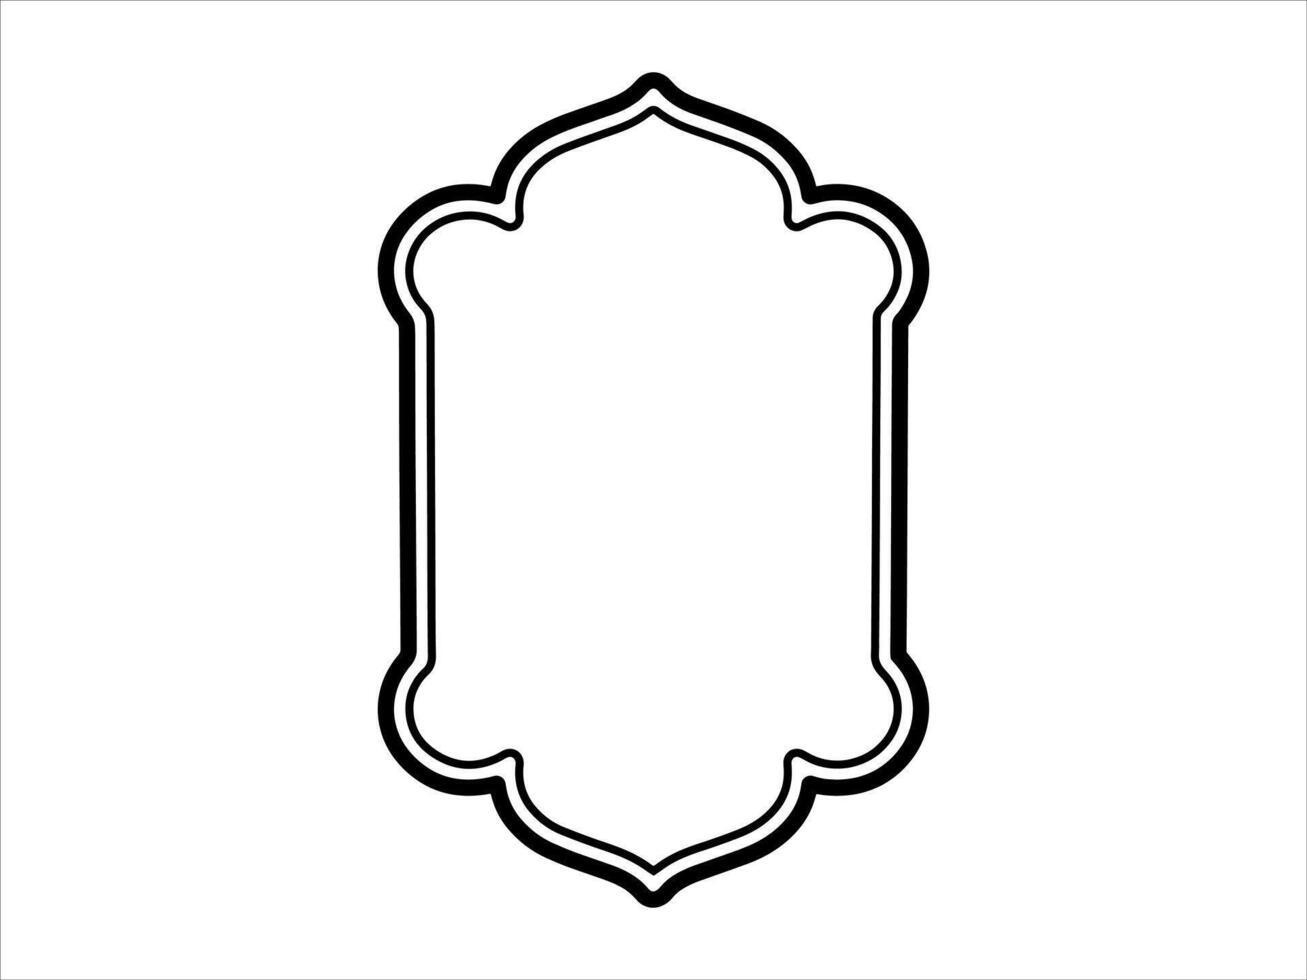 Ramadan Mubarak Frame Line Art Illustration vector